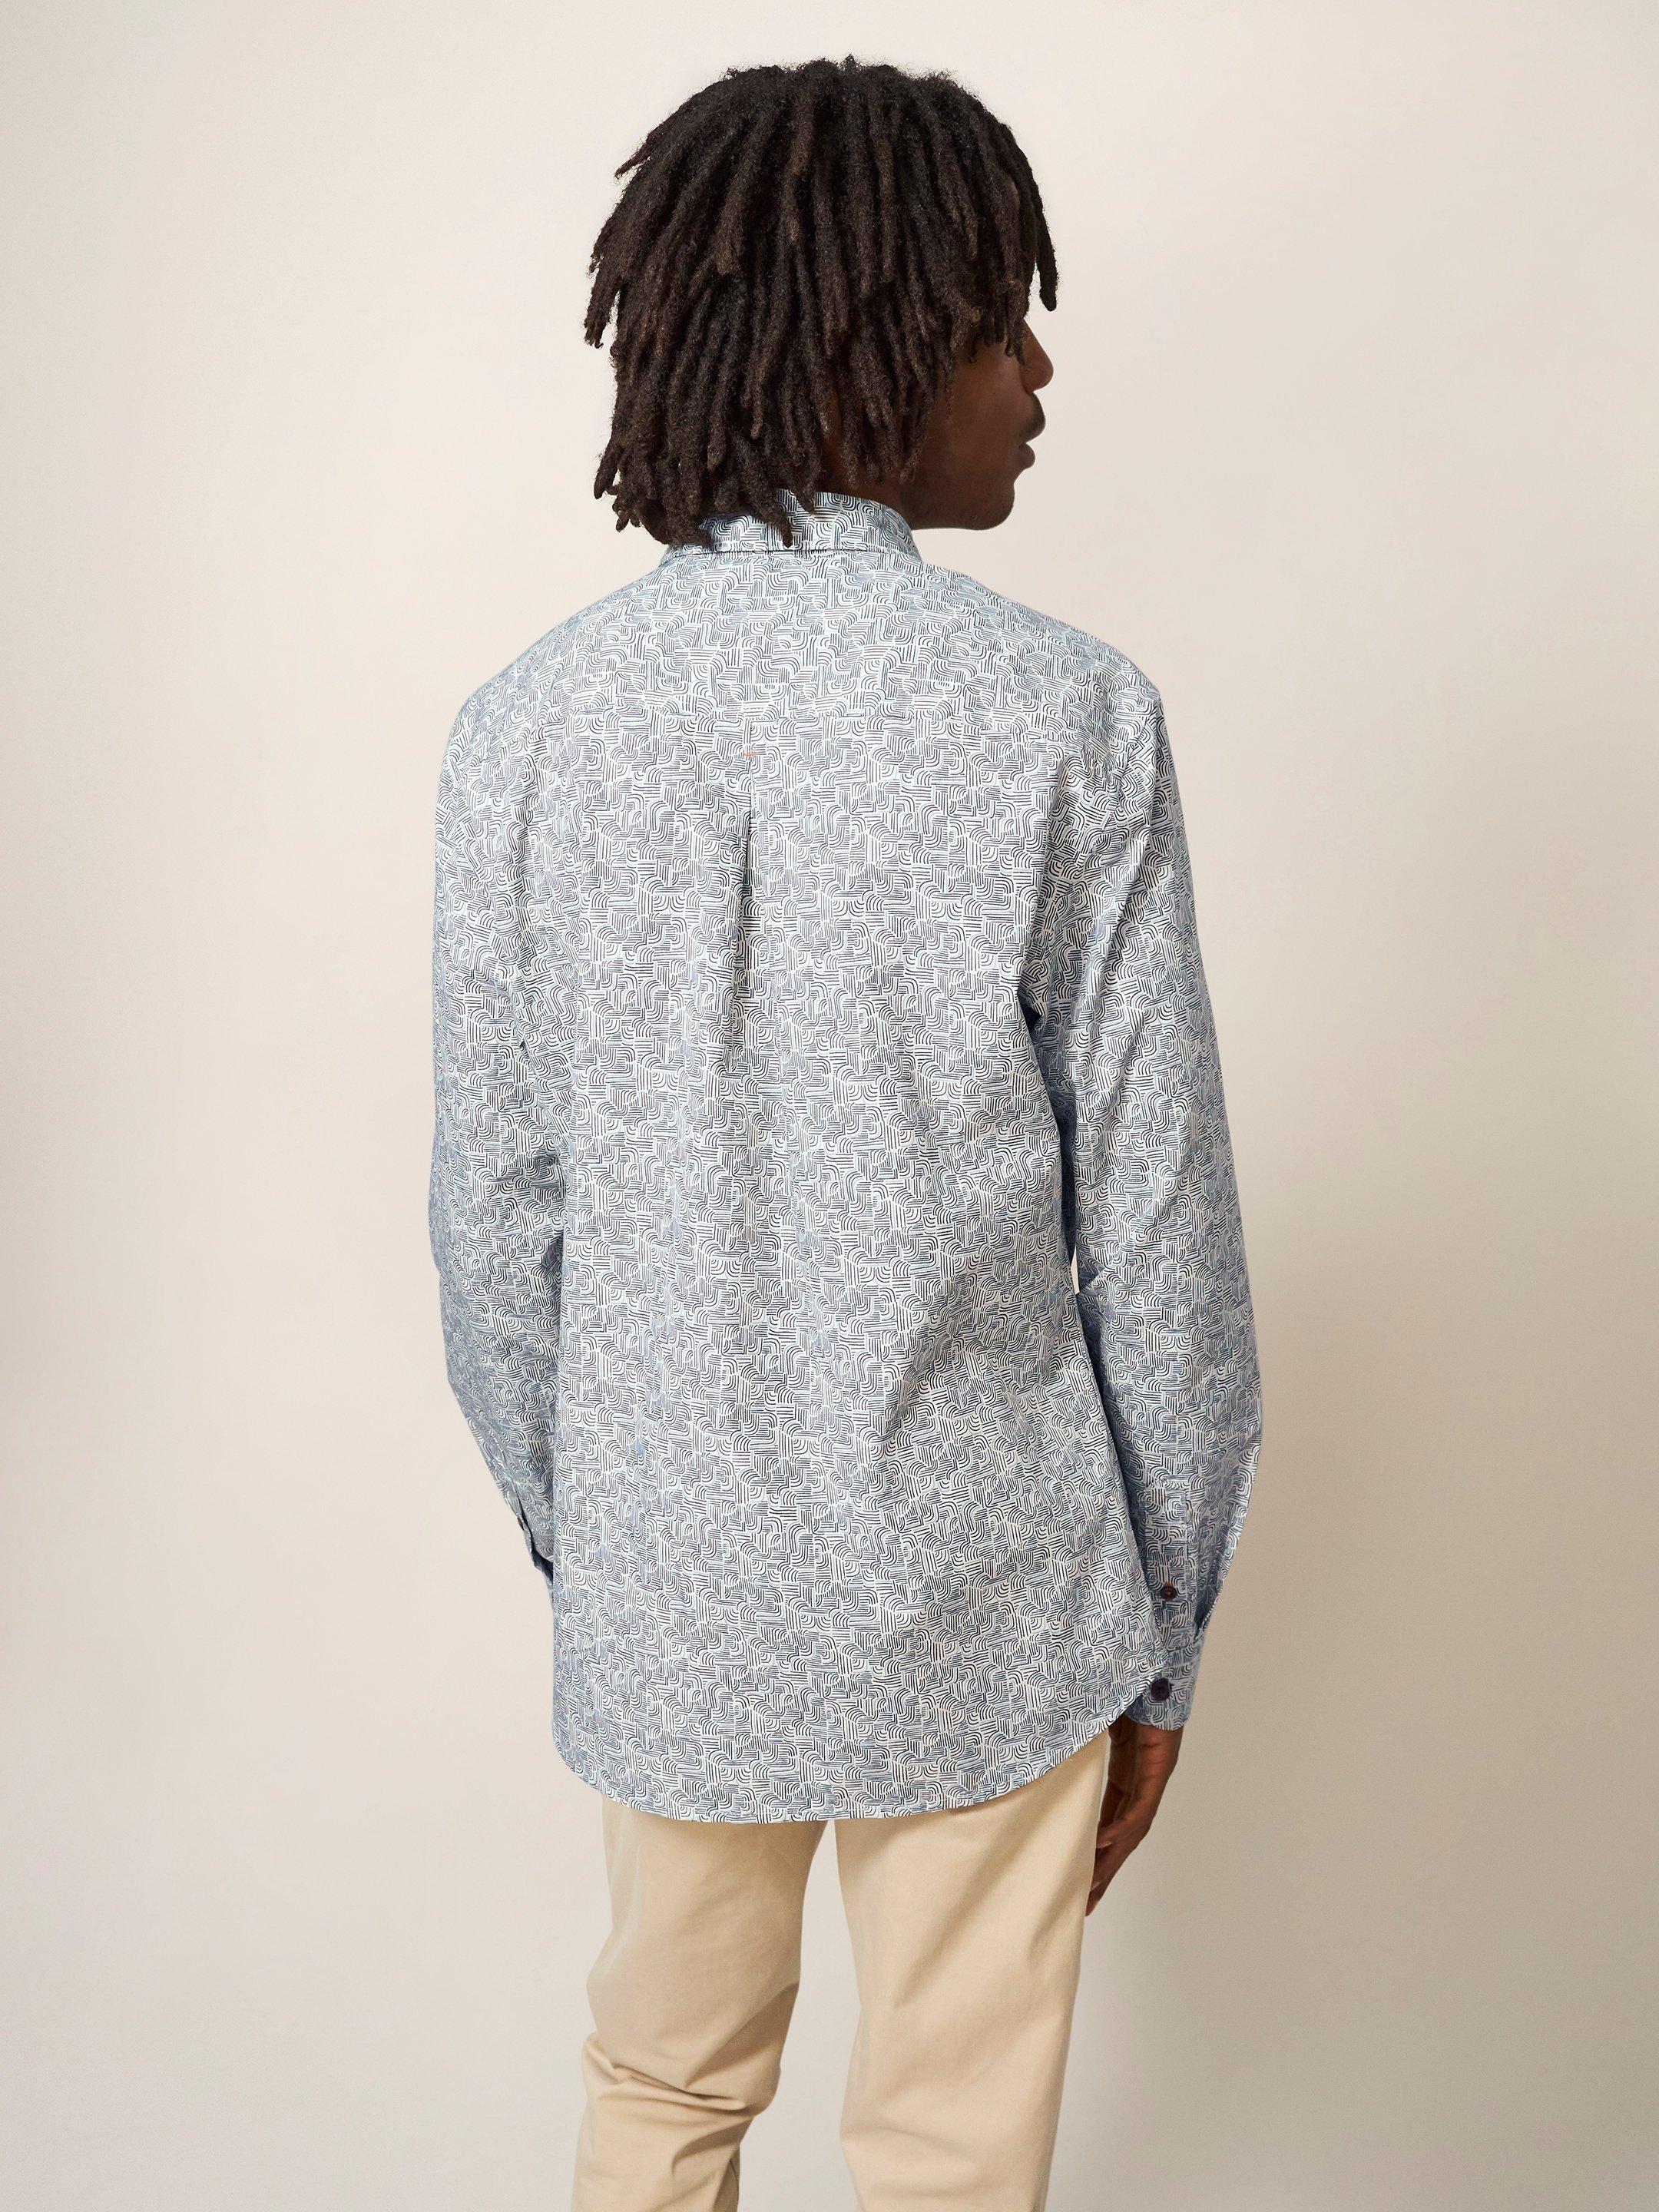 Welch Line Printed Shirt in DARK GREY - MODEL BACK